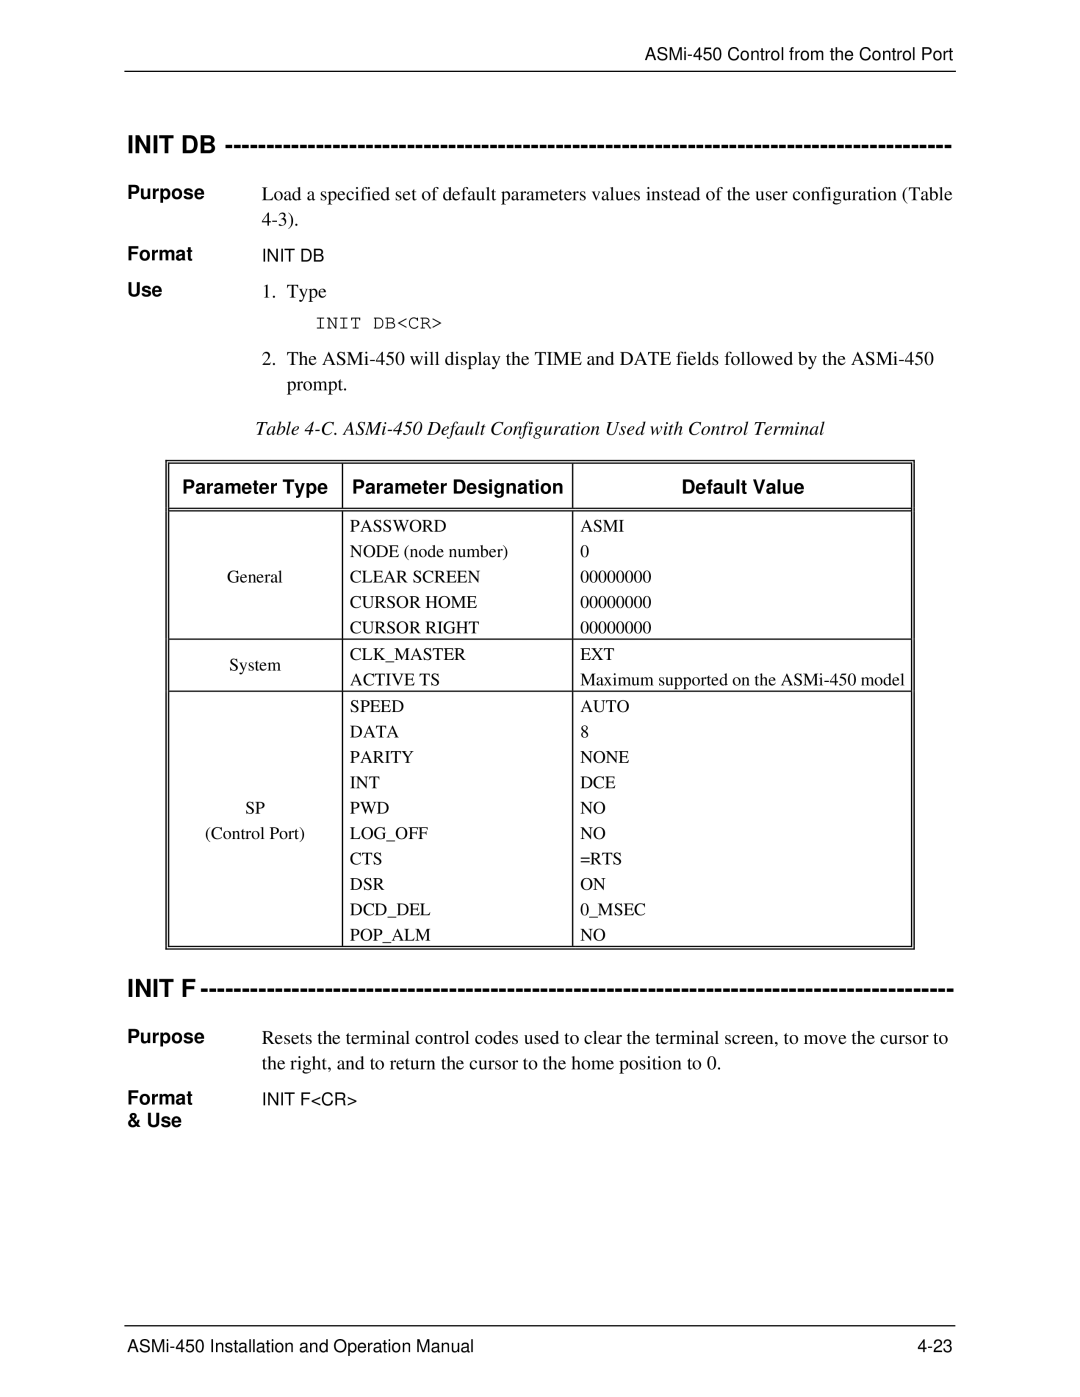 RAD Data comm ASMI-450 operation manual Init Db, Format, Parameter Designation, Default Value, Purpose, Parameter Type 